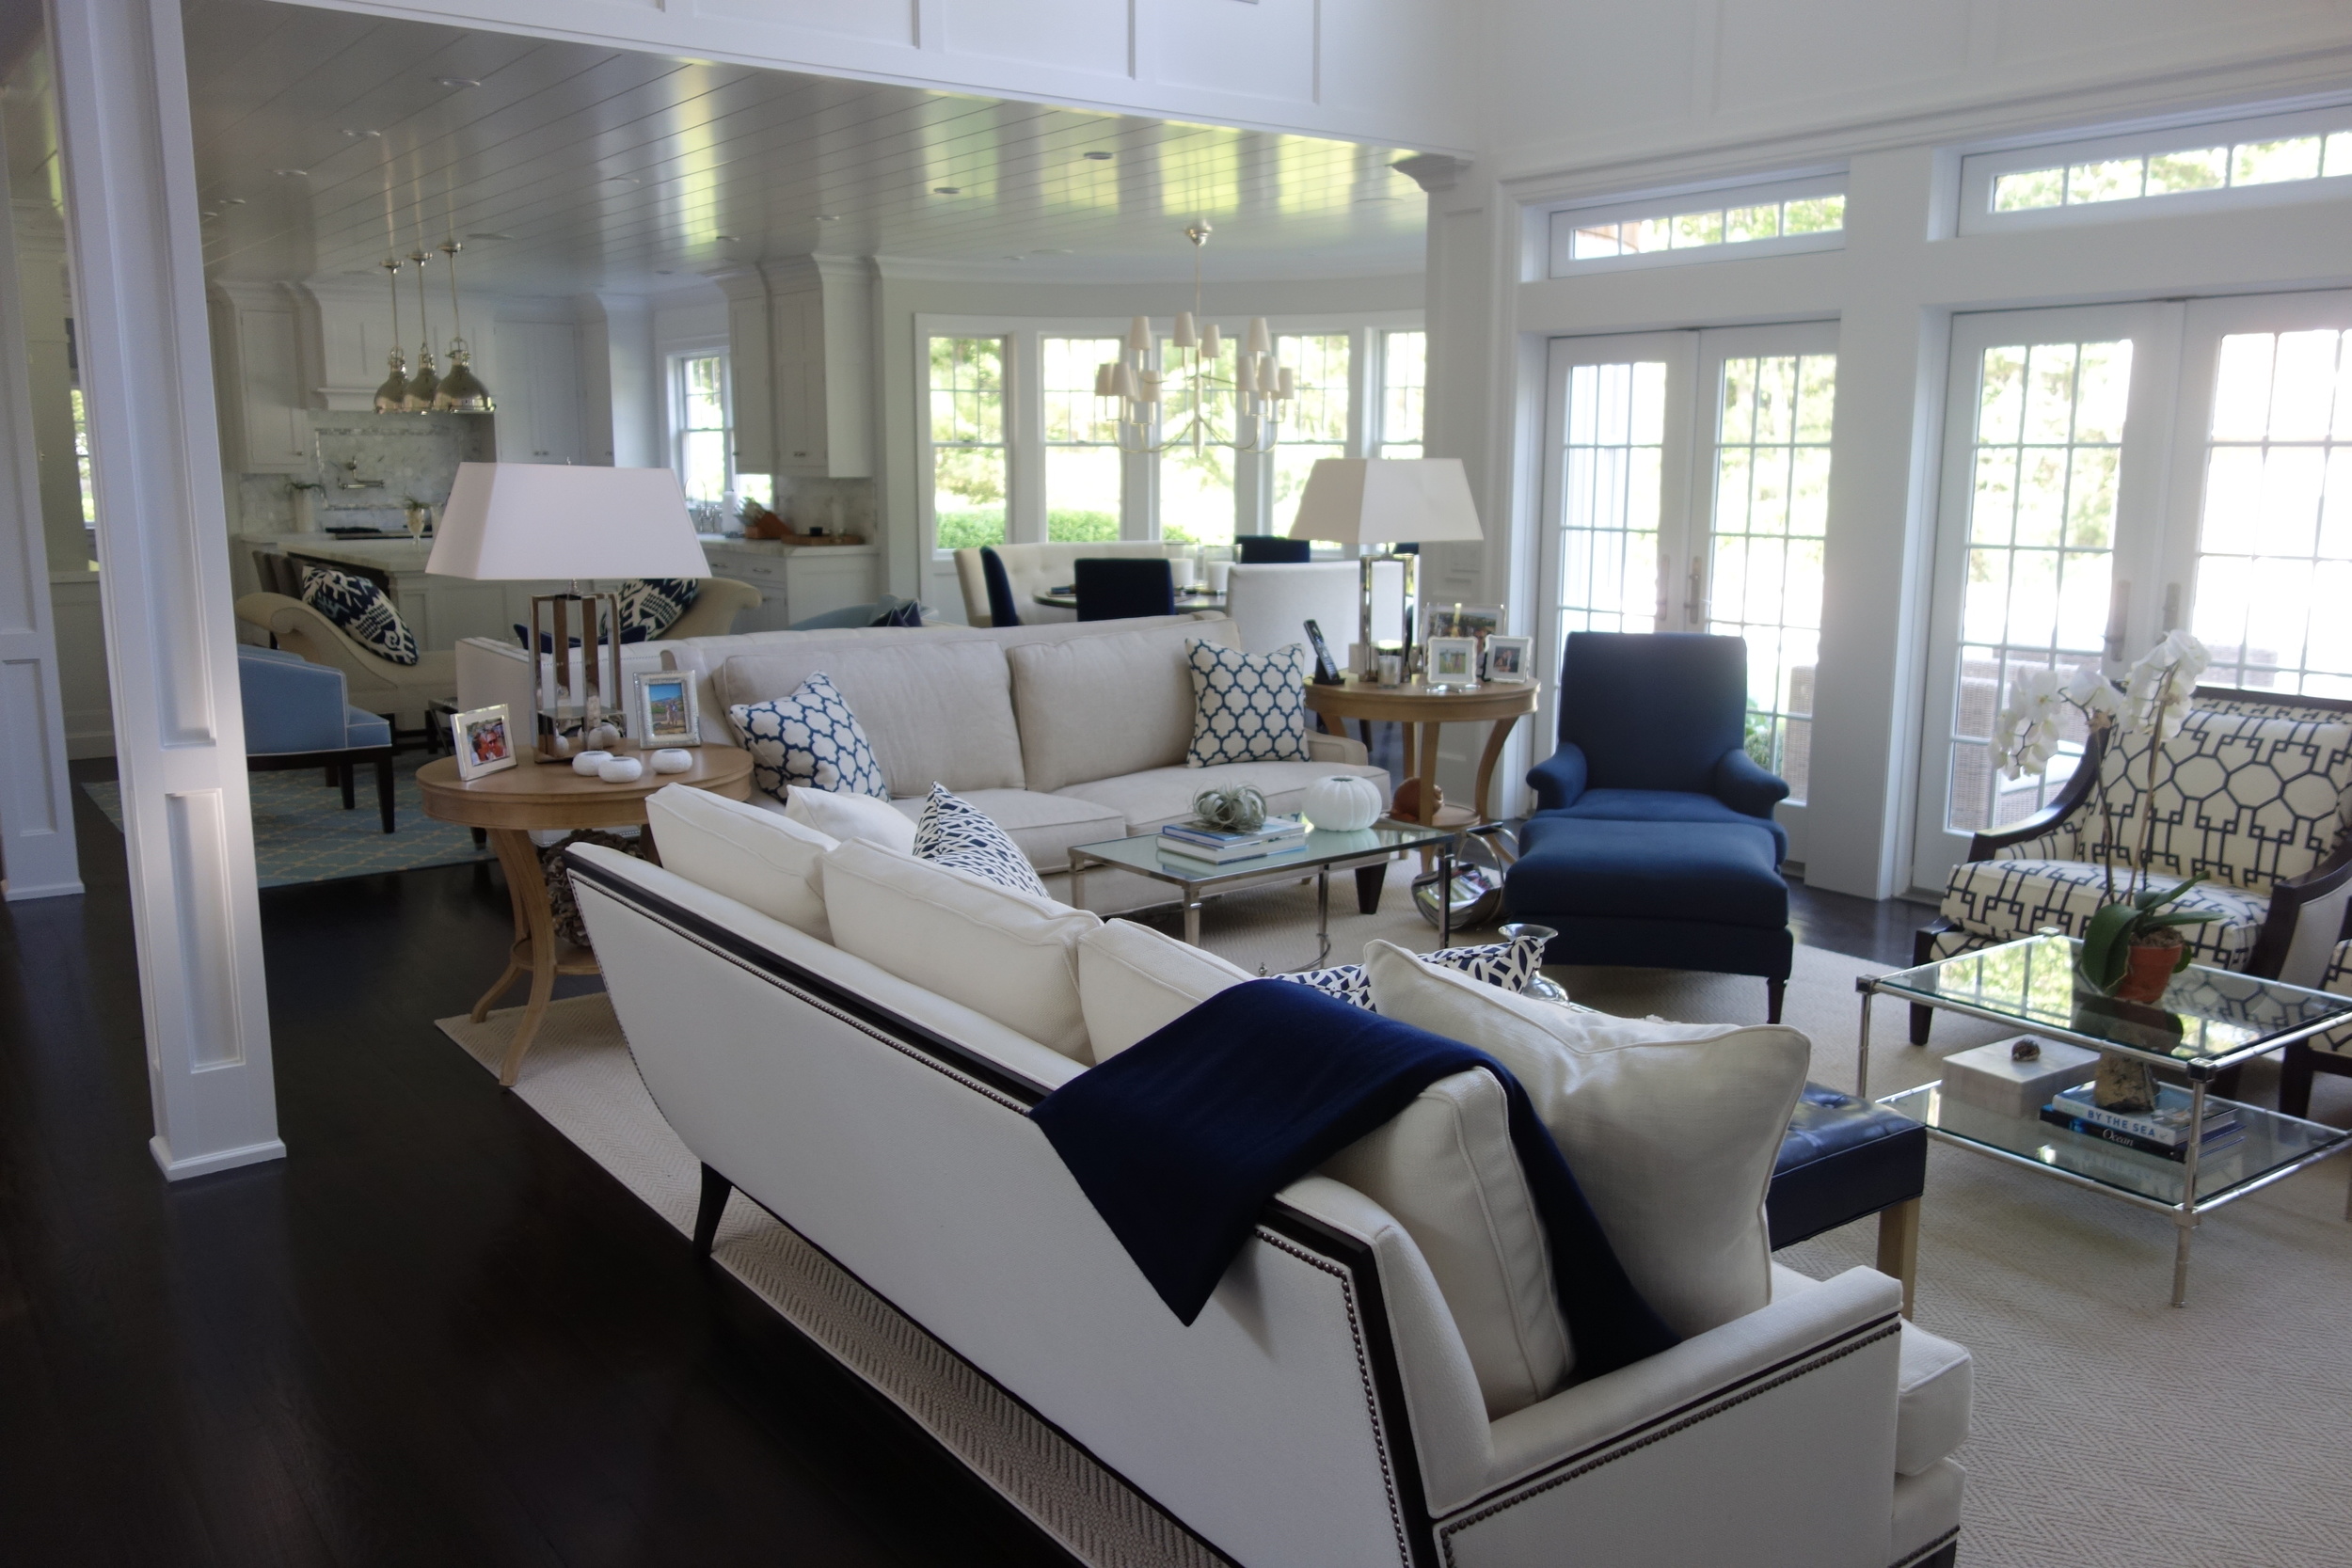 Wainscott Hampton Home Lead Image for Interior Design Portfolio